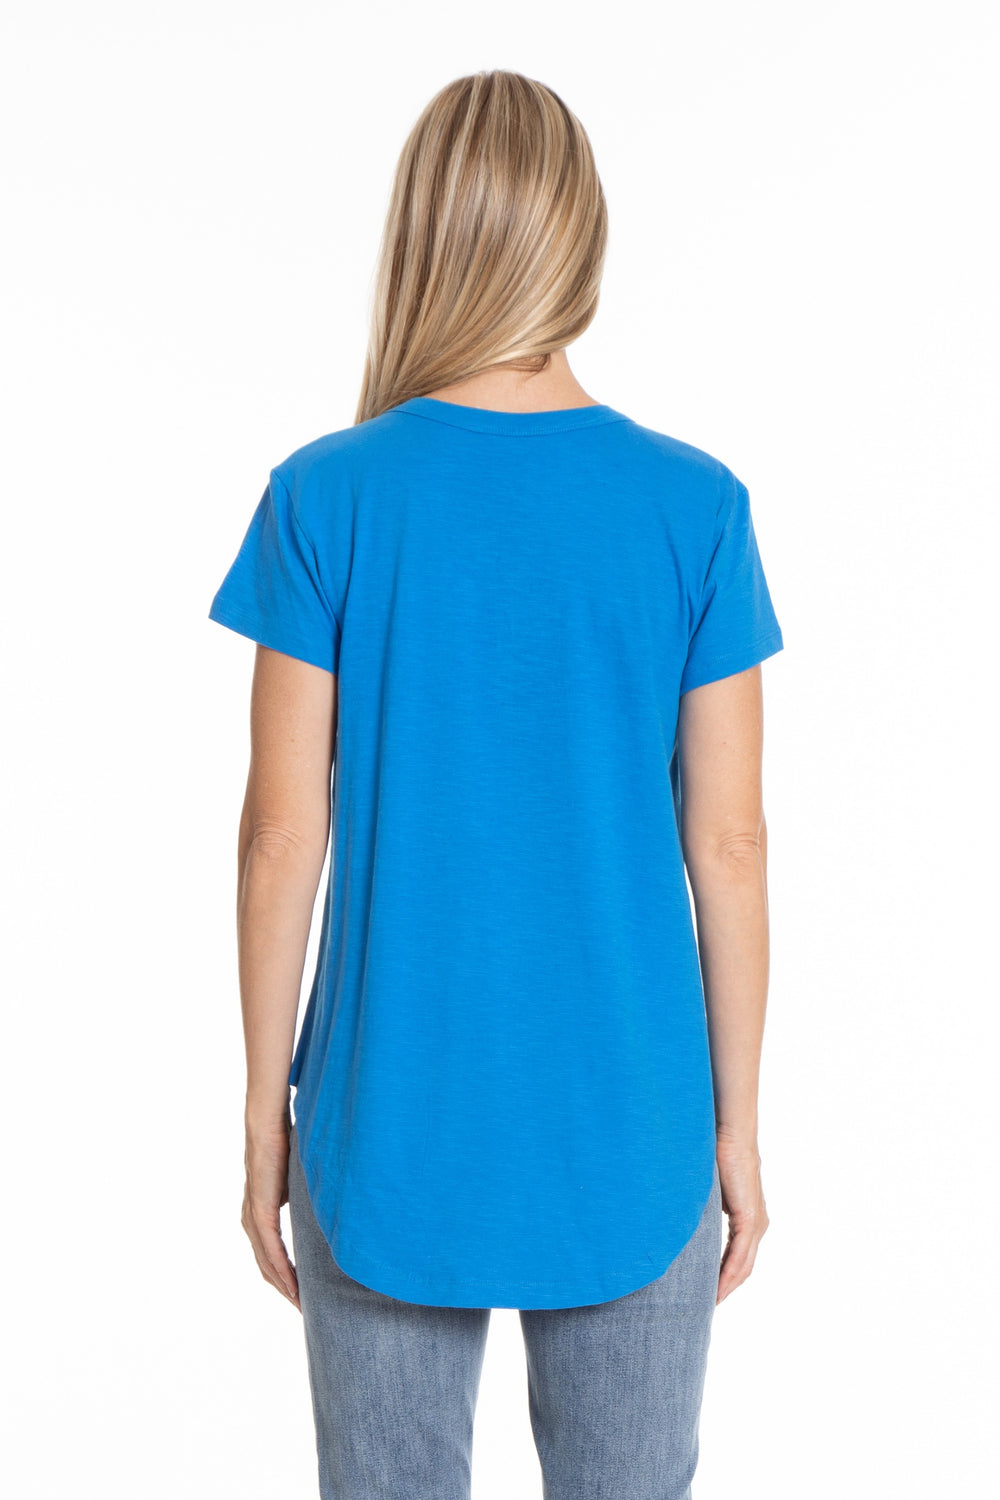 APNY t-shirt, short-sleeve cotton v-neck (2 colors)